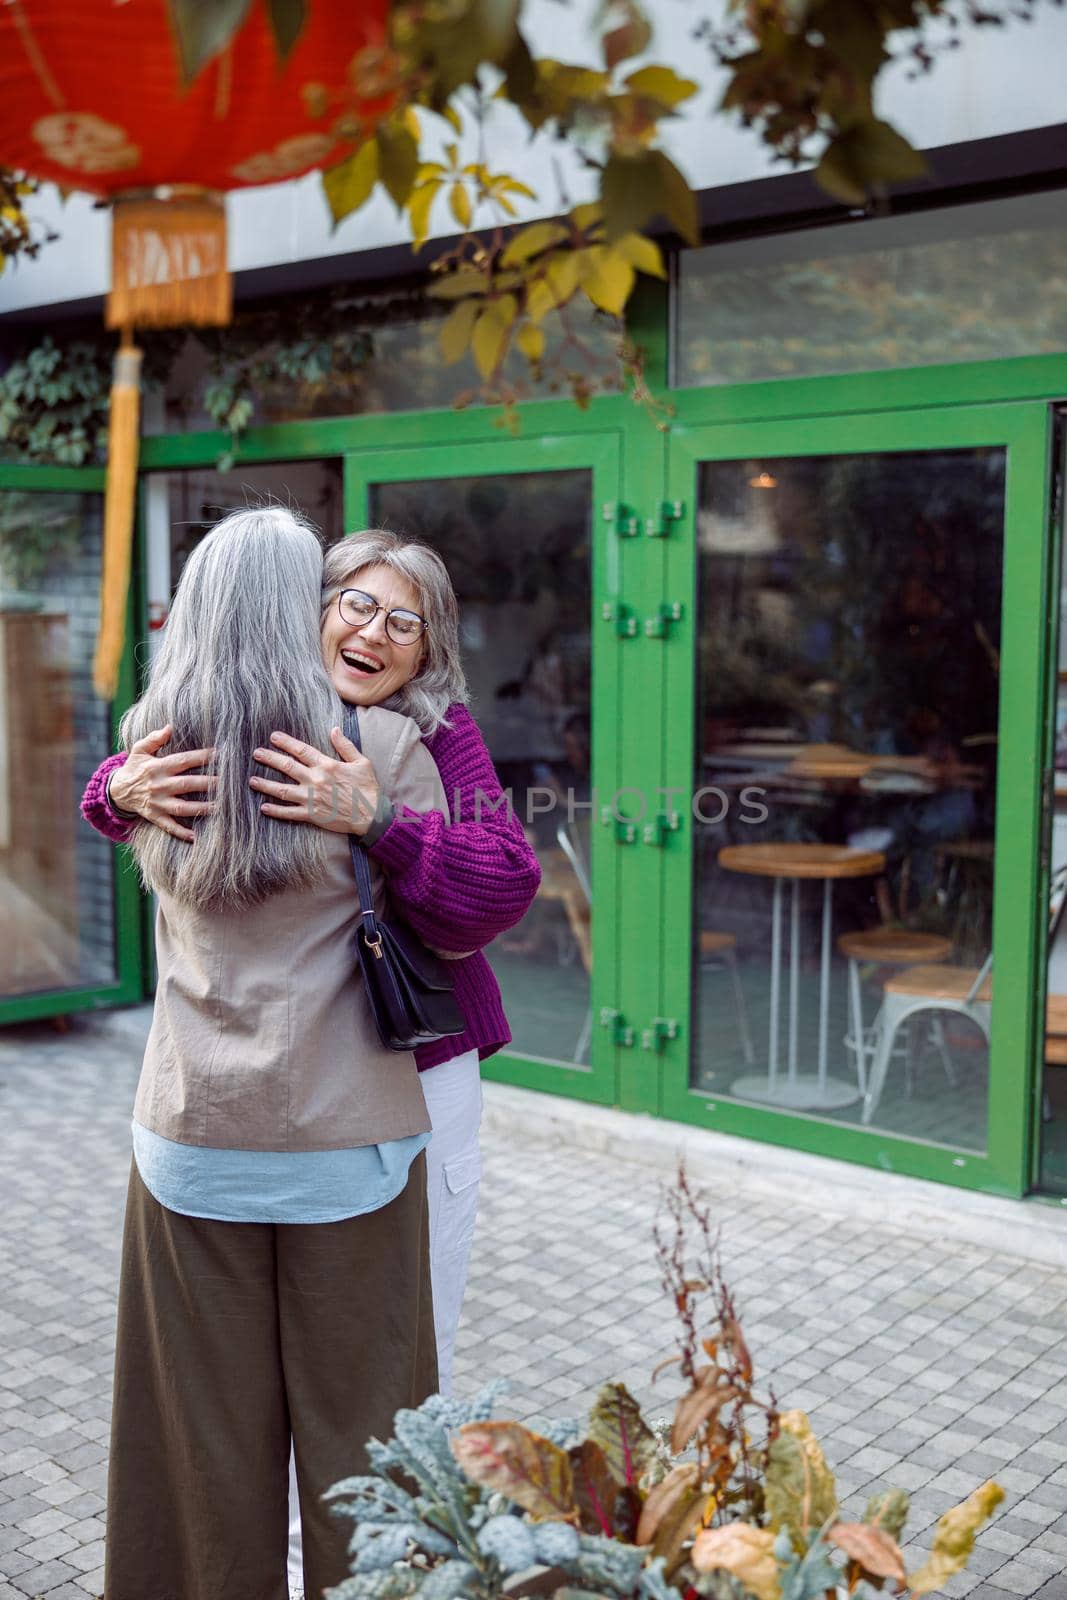 Joyful senior lady in warm jacket hugs long haired best friend meeting on modern city street. Long-time friendship relationship